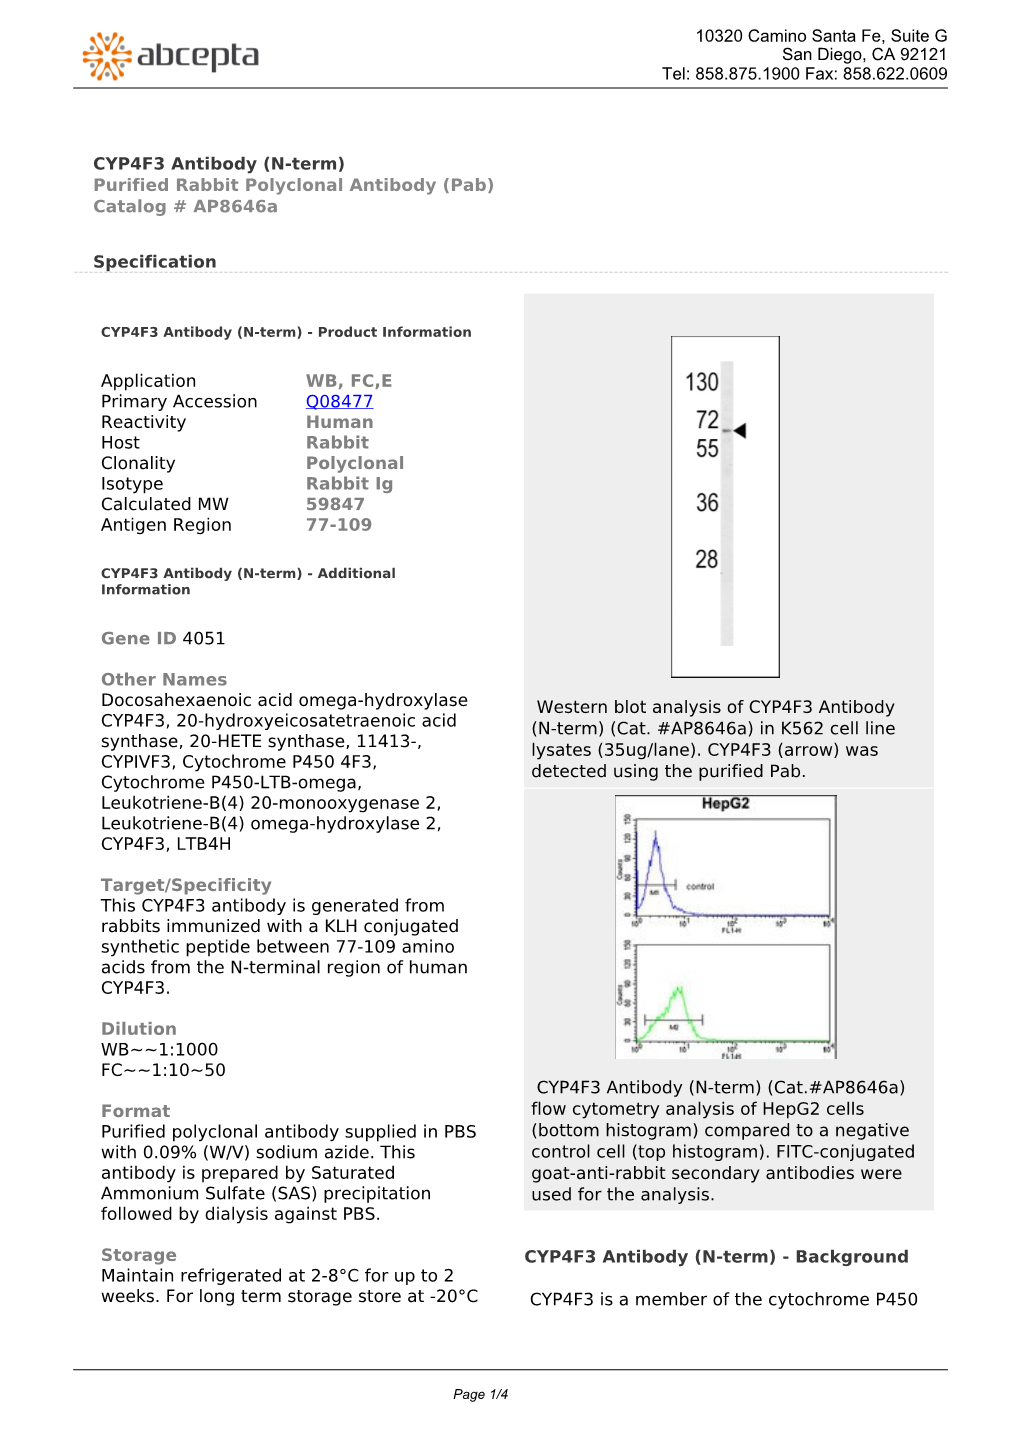 CYP4F3 Antibody (N-Term) Purified Rabbit Polyclonal Antibody (Pab) Catalog # Ap8646a